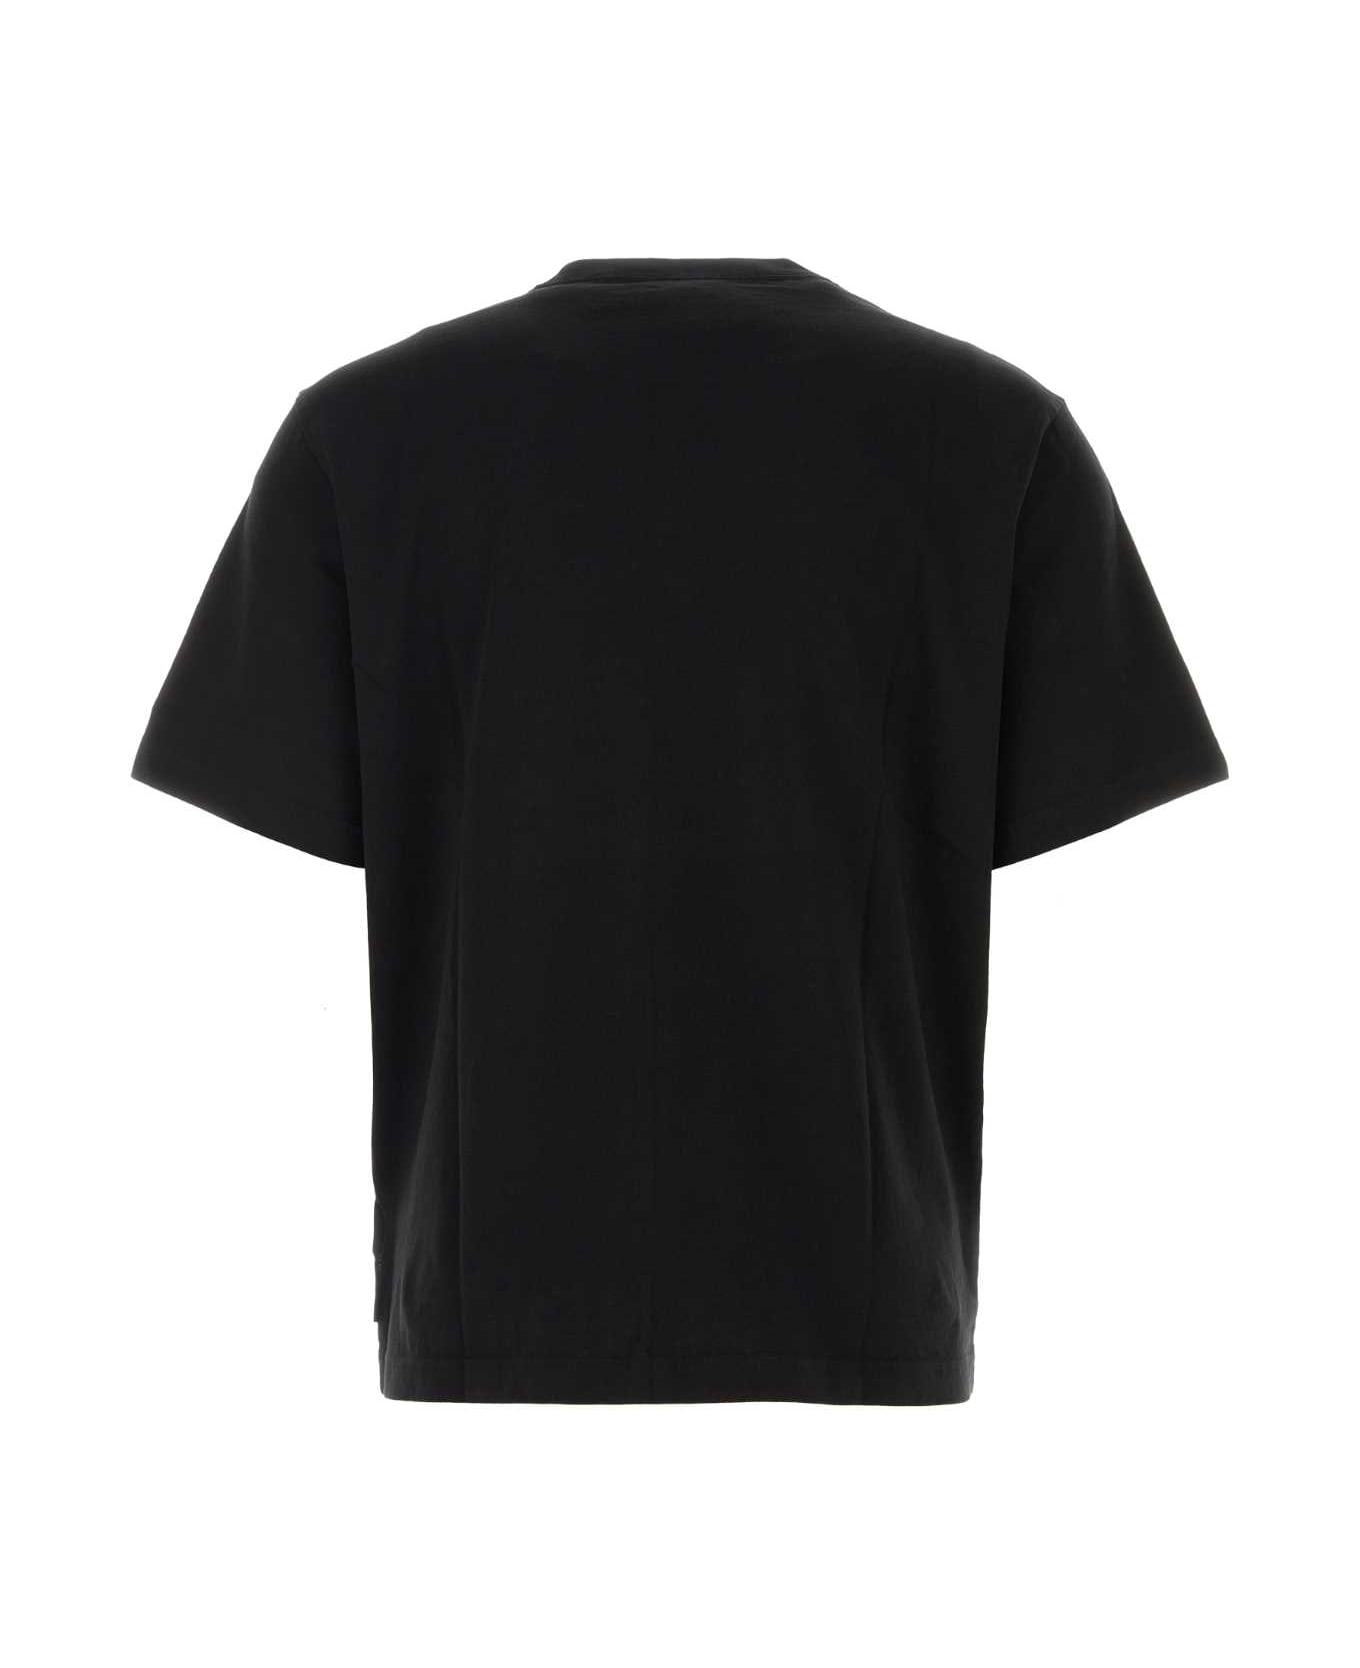 Moose Knuckles Black Cotton T-shirt - BLACK